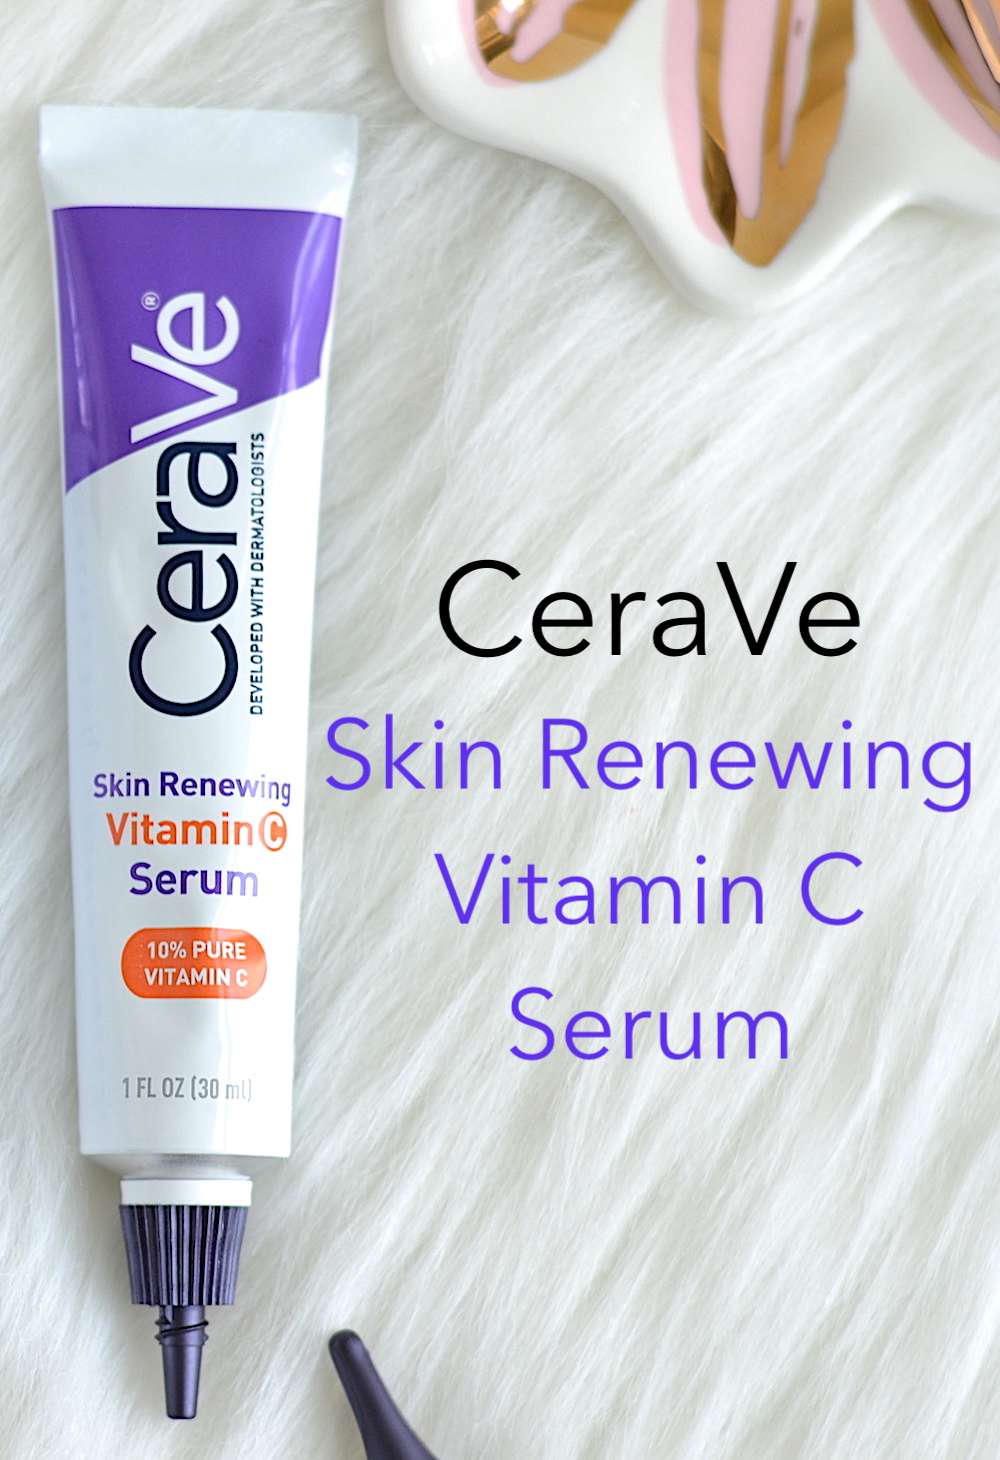 Cerave Skin Renewing Vitamin C Serum 